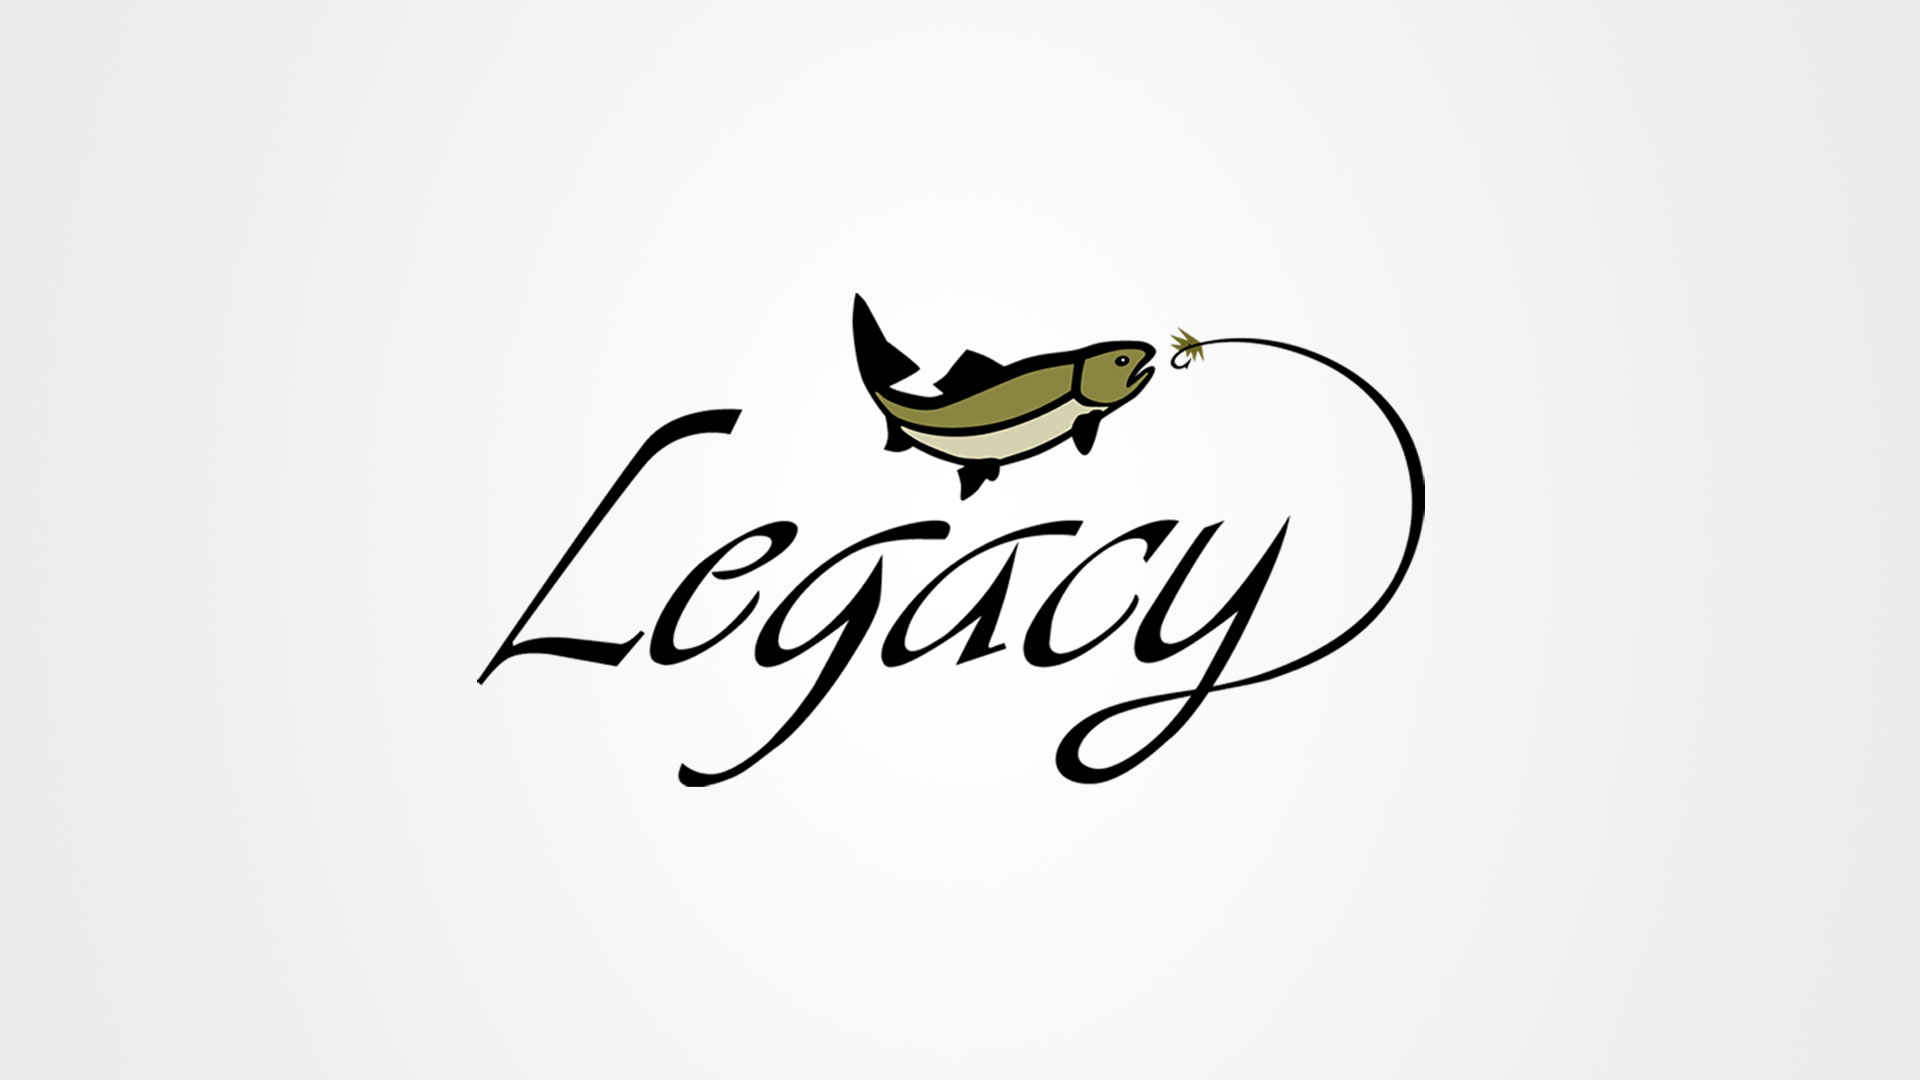 Legacy-Land-Investments-Logo-1920x1080